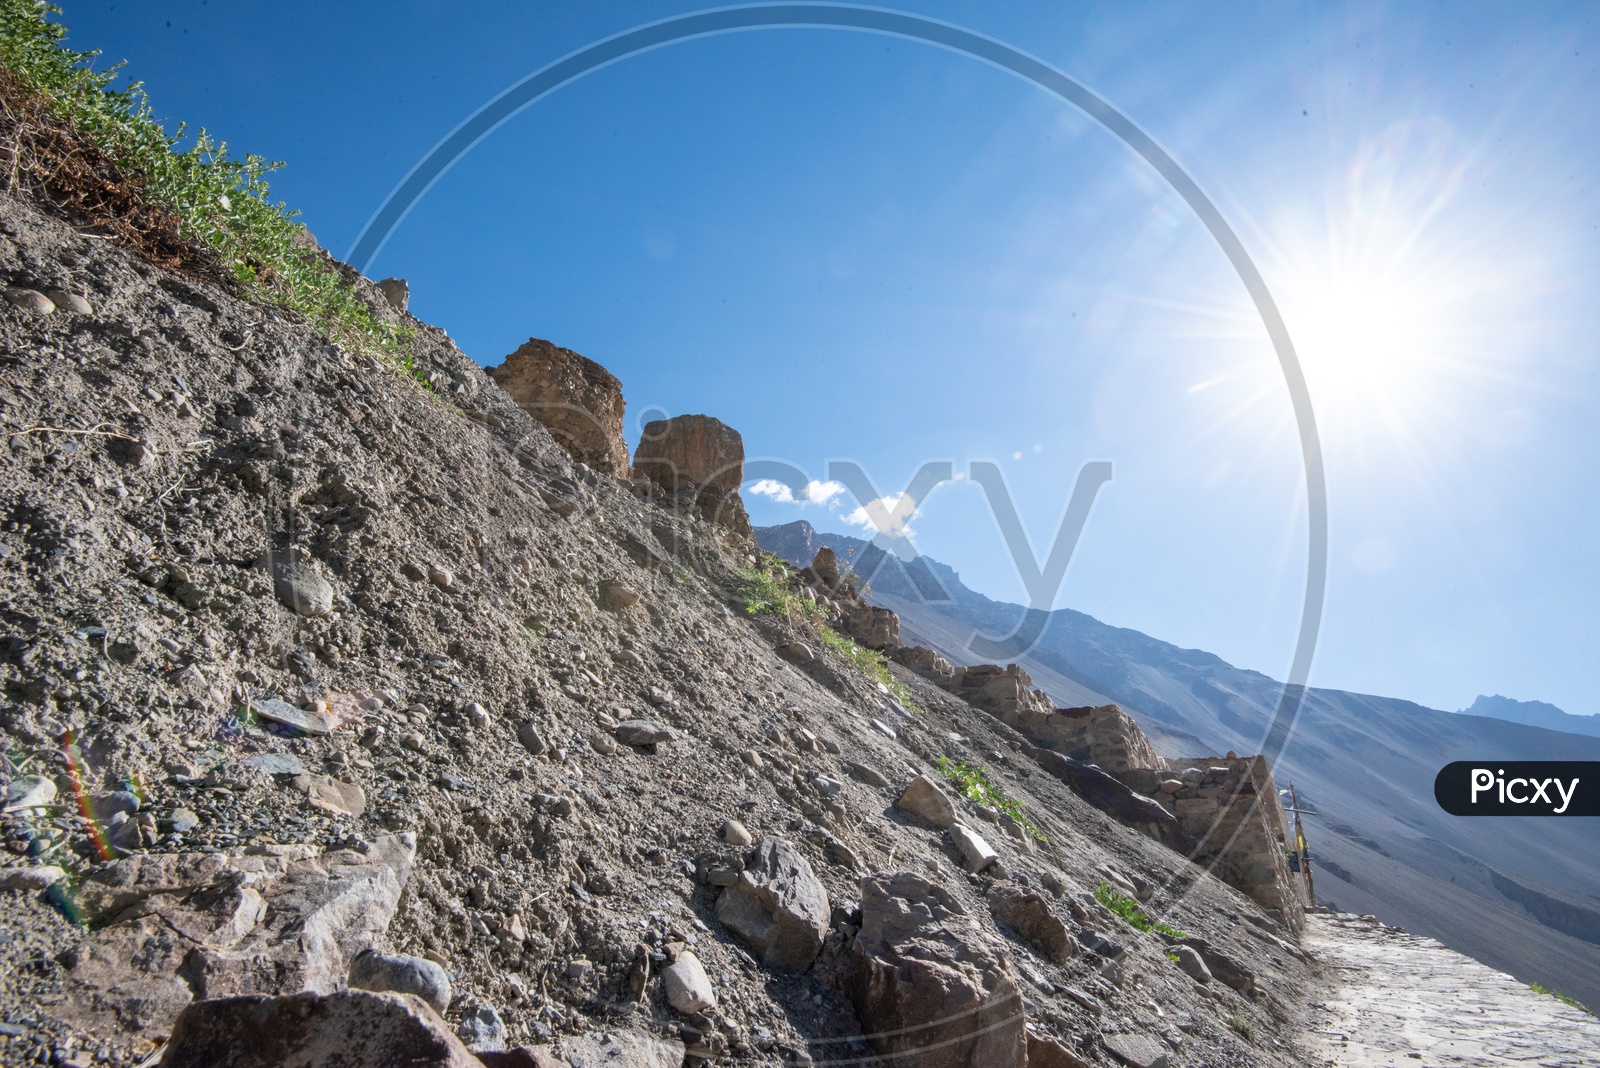 Sand Terrains With Sedimentary Rocks In Leh Valleys